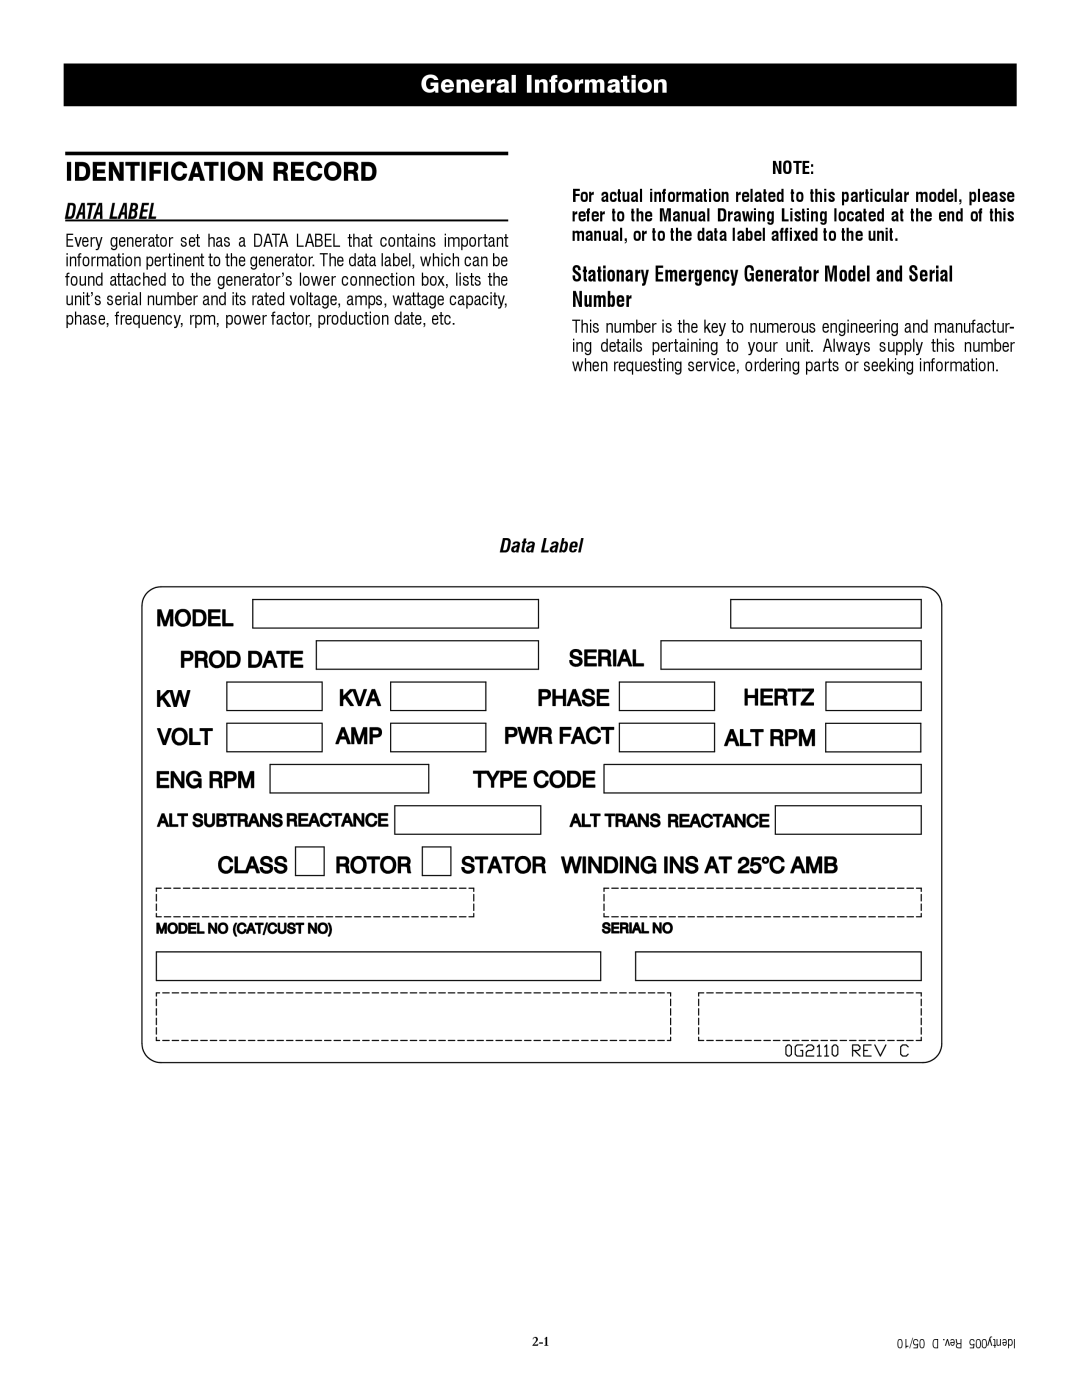 Generac QT04524ANSX owner manual Identification Record, General Information, Data Label 